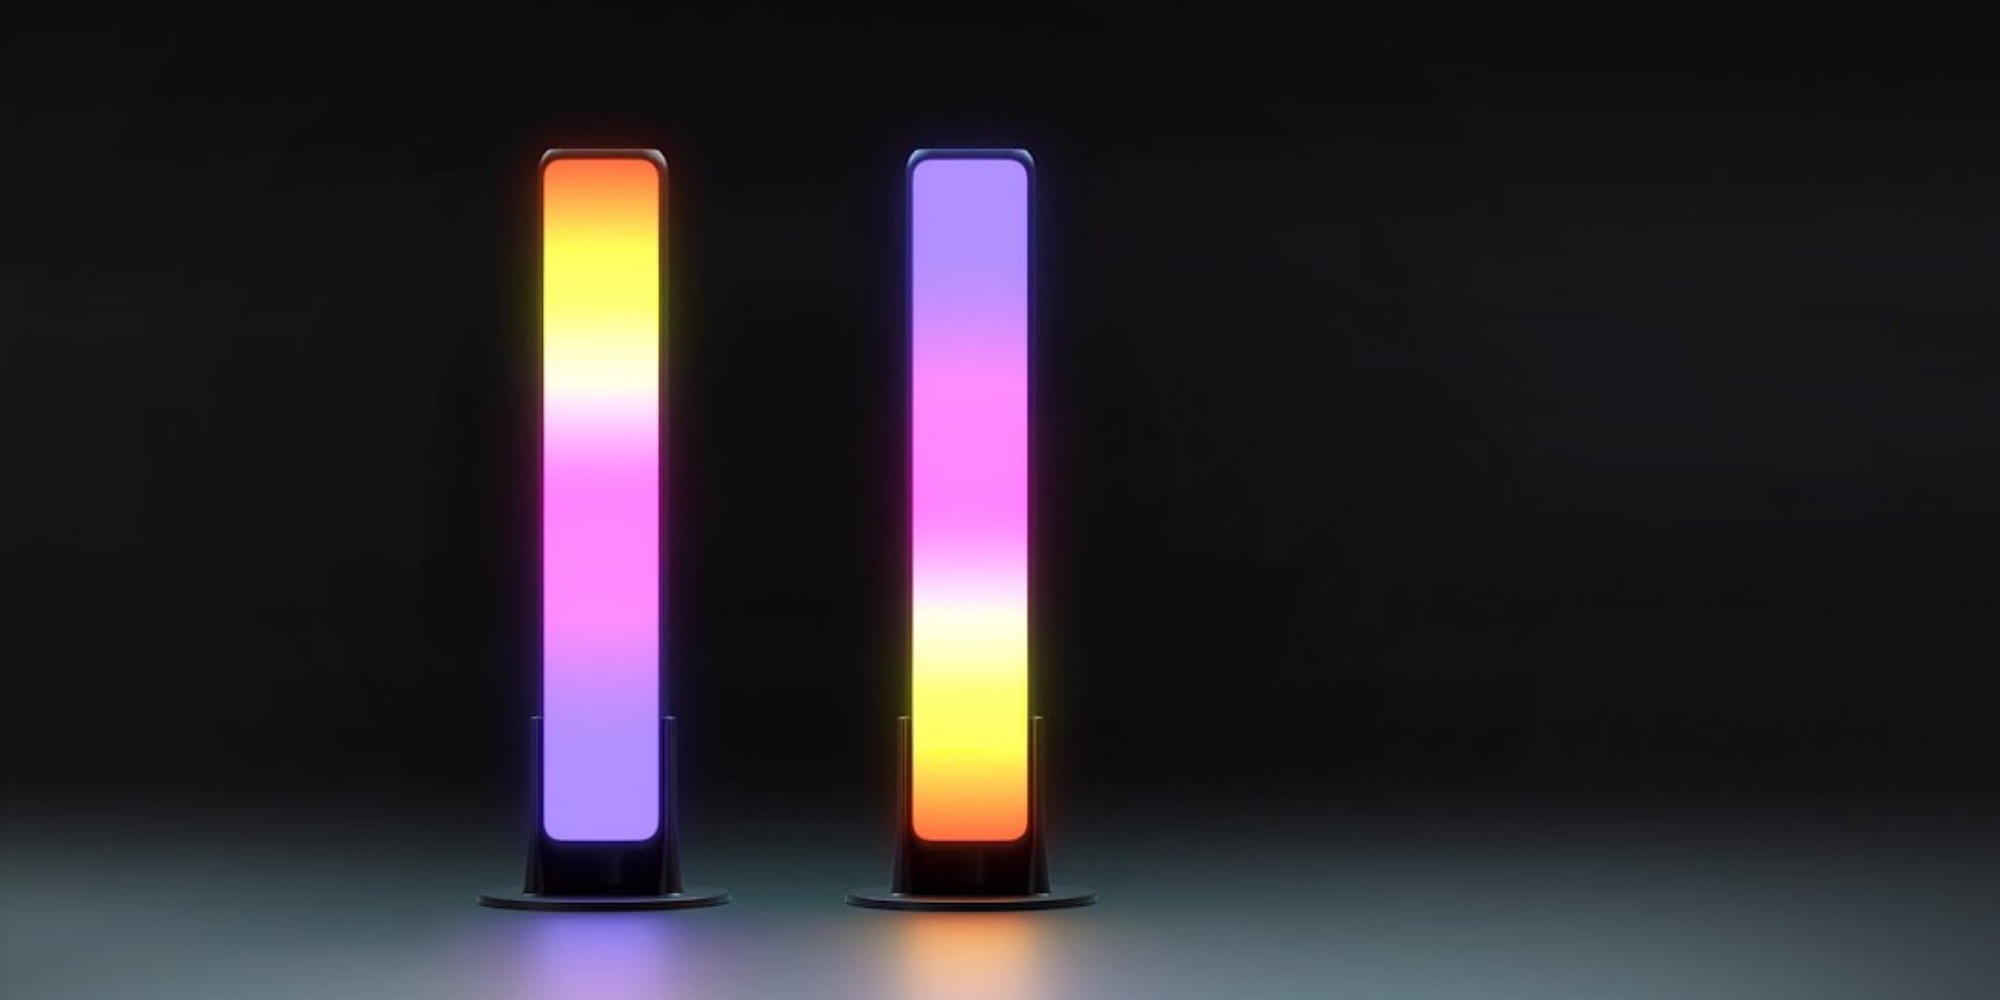 Govee Flow Pro Light Bar Review - Smart LED light bars now